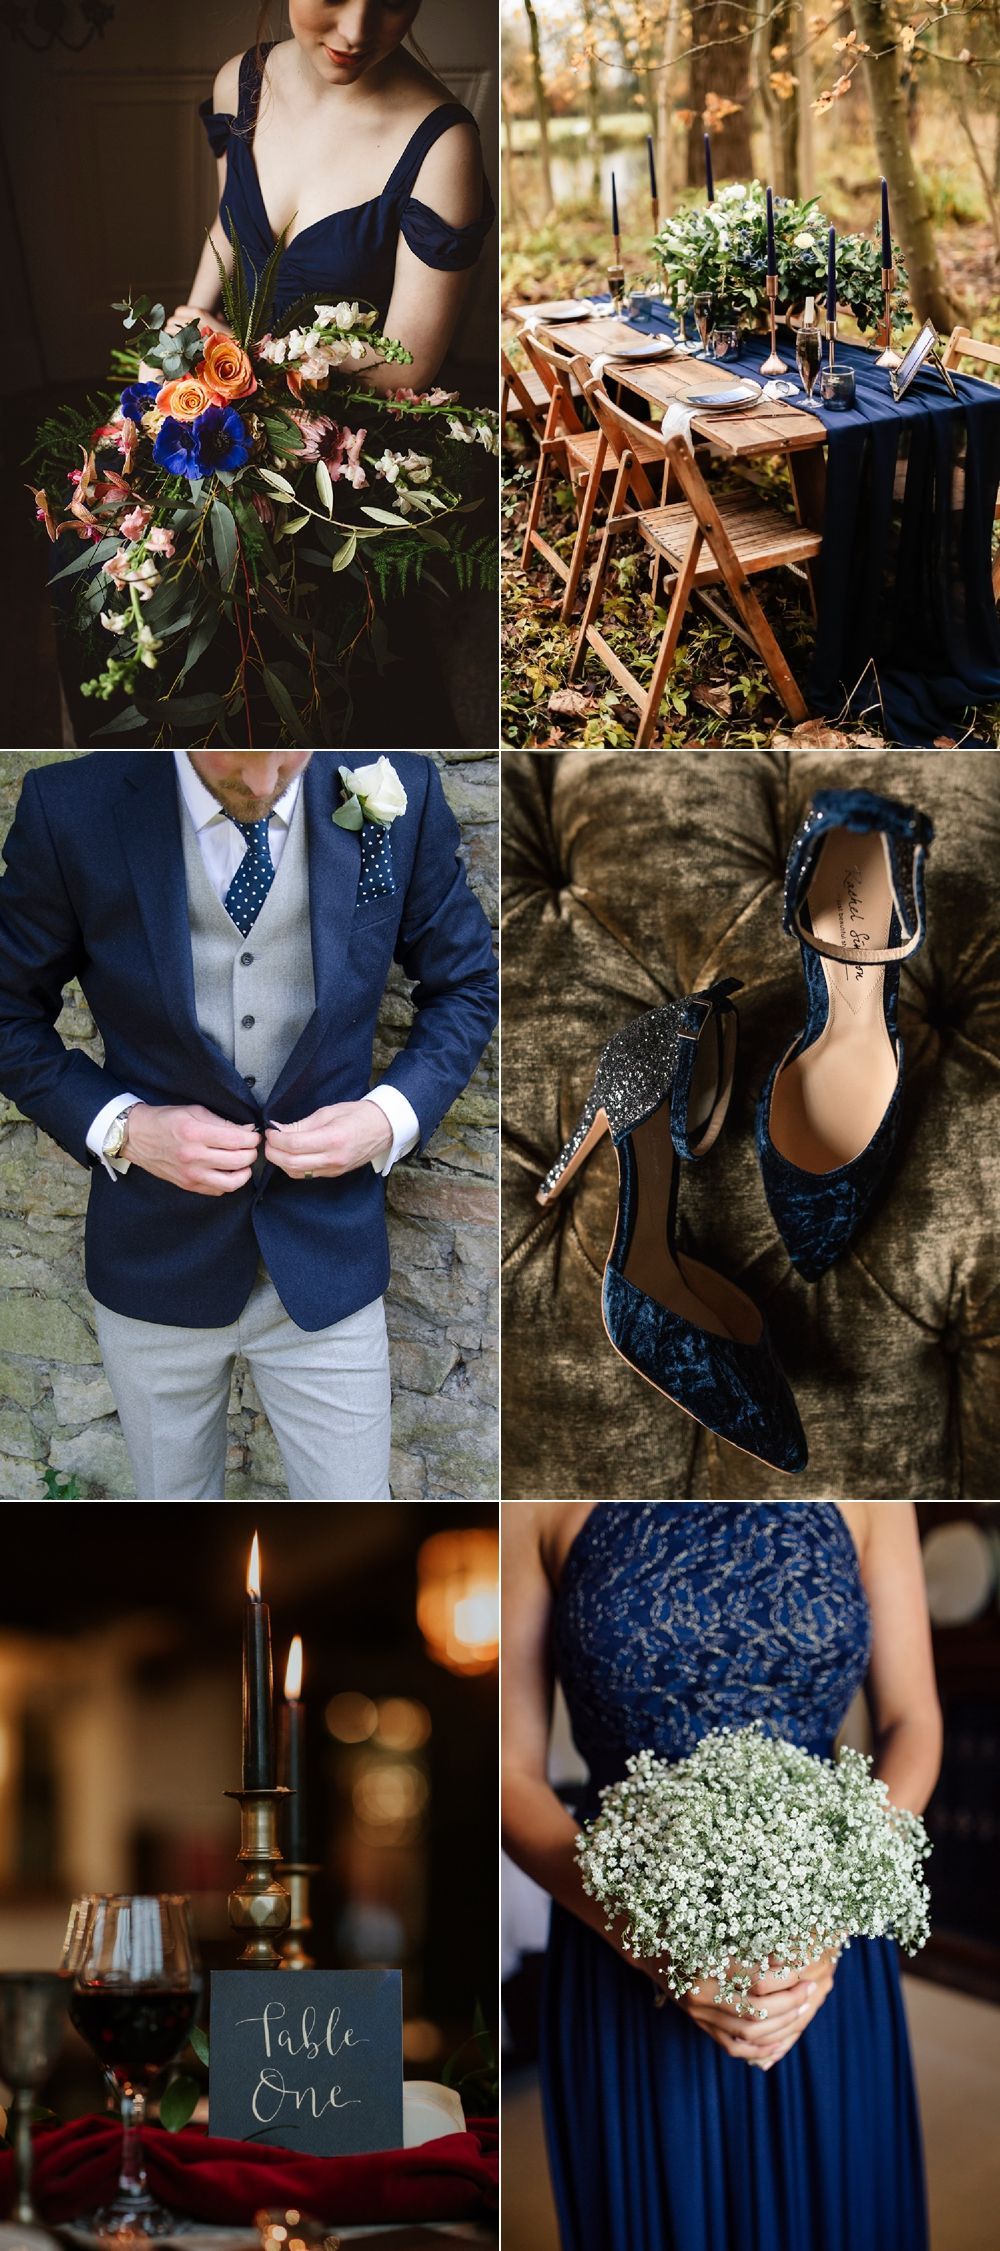 14 wedding Blue navy ideas